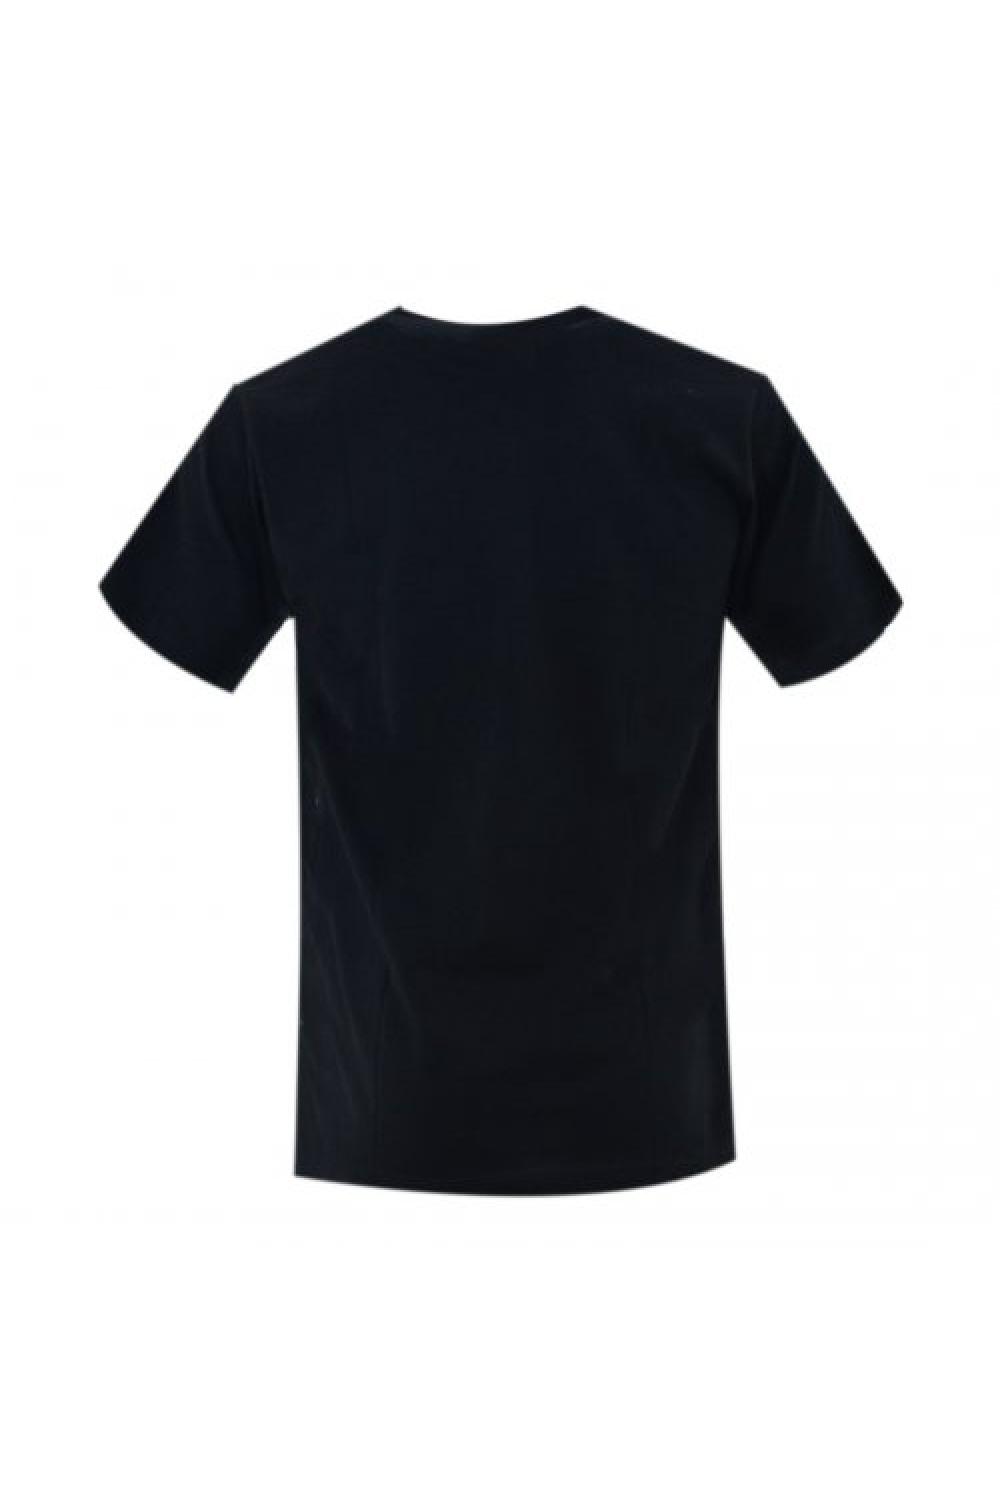 RIPNDIP T-shirt Lord Devil Pocket Unisex - Black (RND9067)